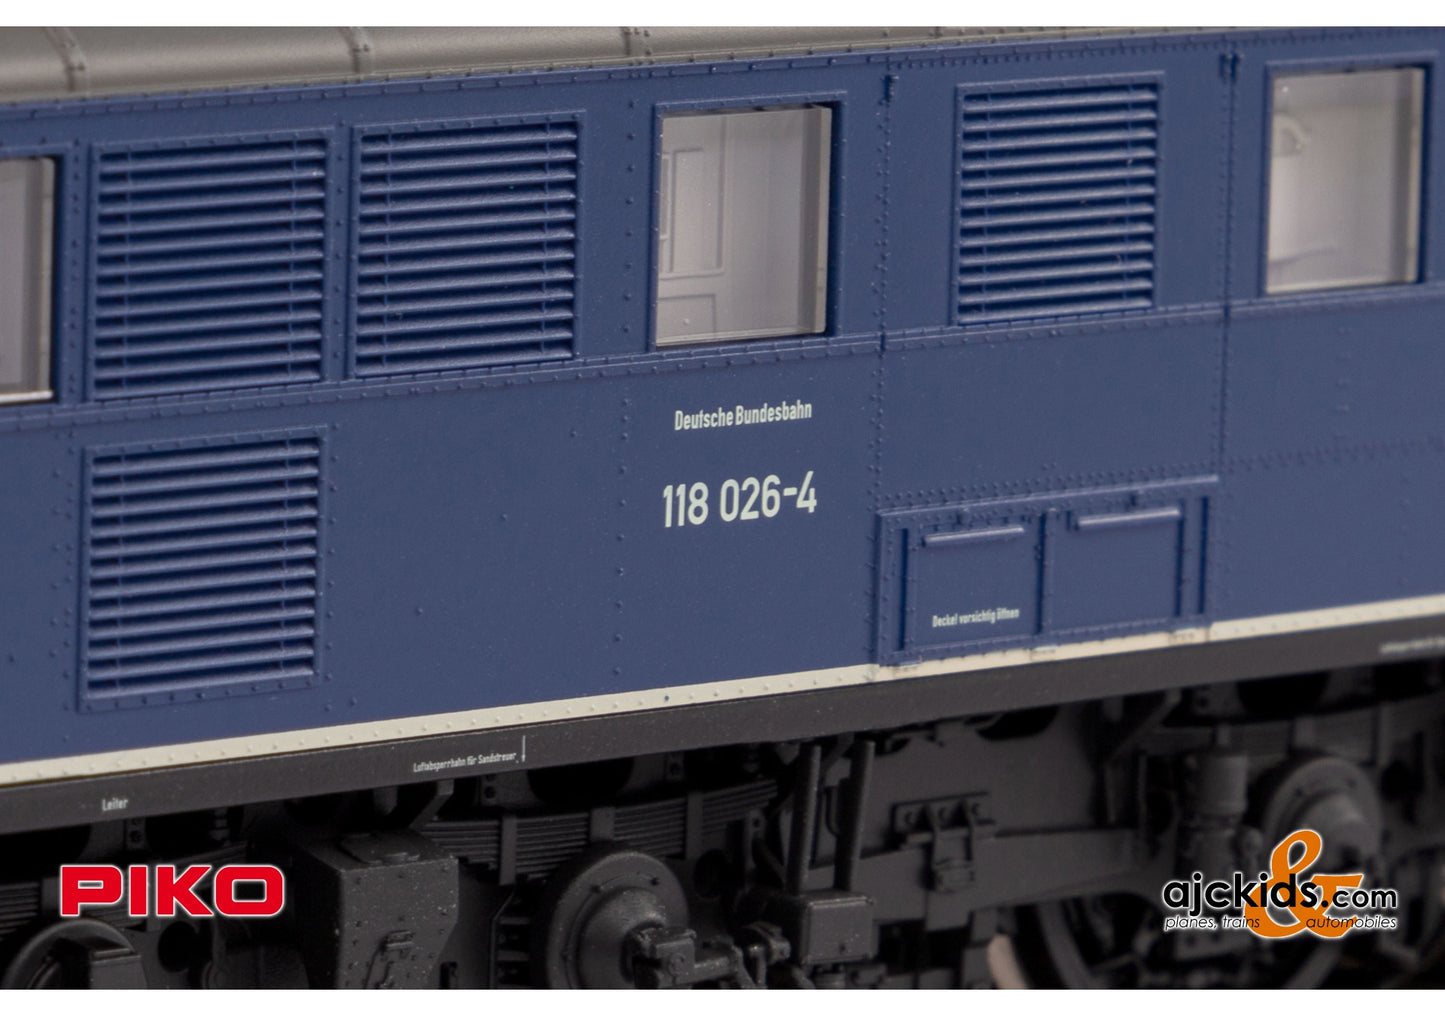 Piko 51878 - BR 118 Electric Locomotive DB IV Sound